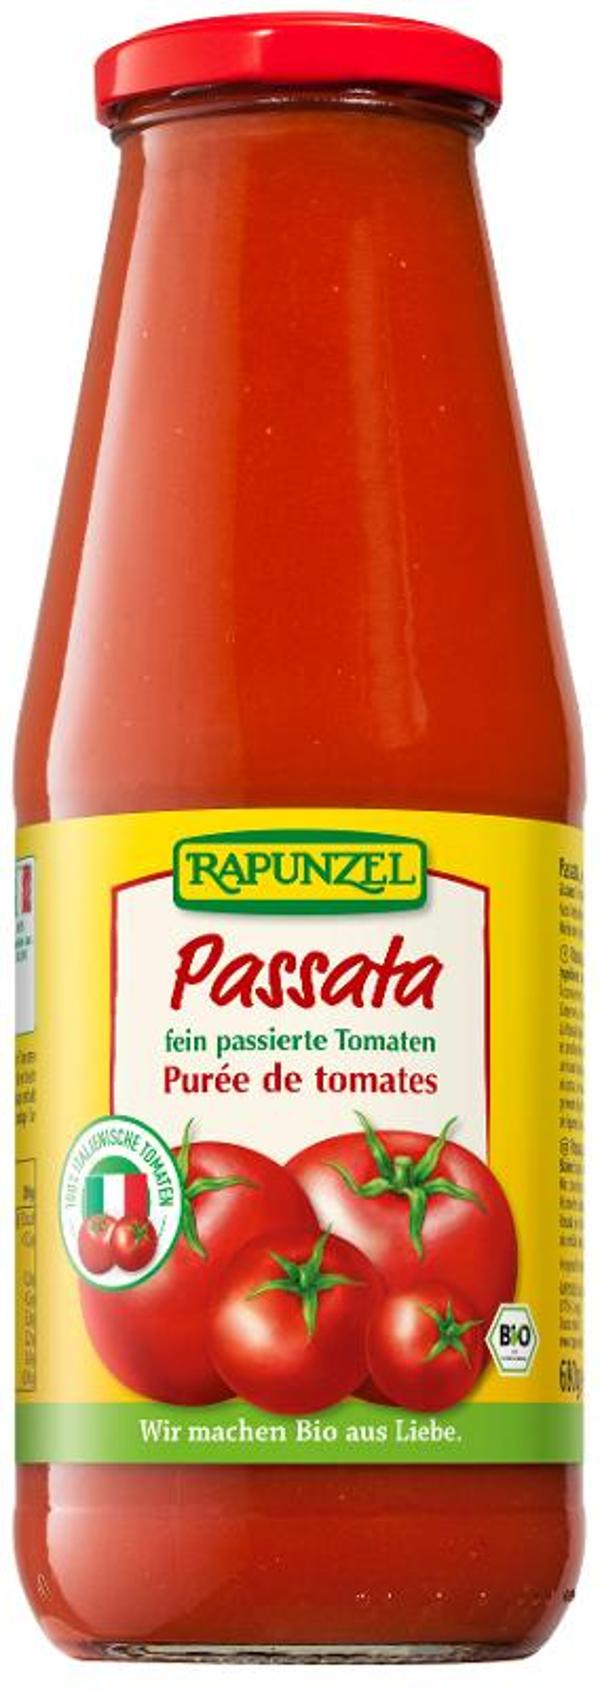 Produktfoto zu Passata Rapunzel 680 g